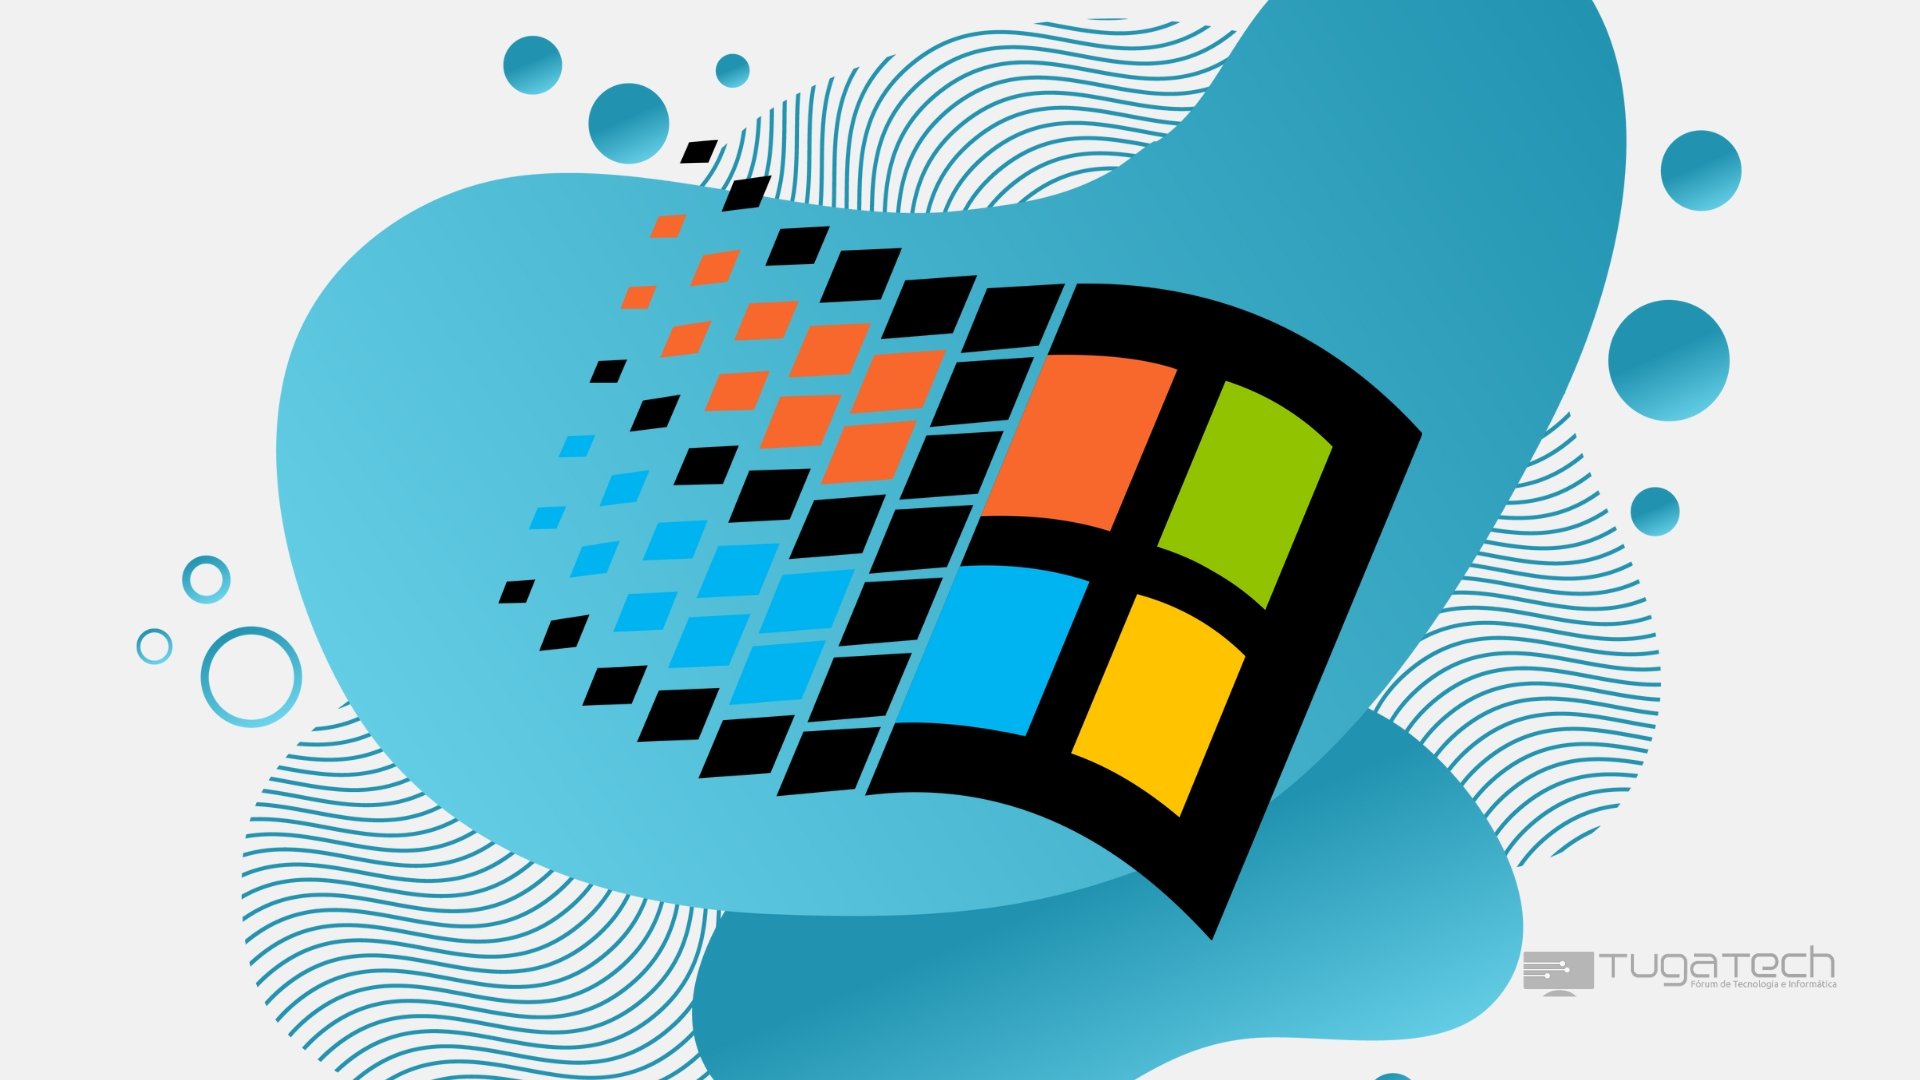 Windows 95 logo do sistema